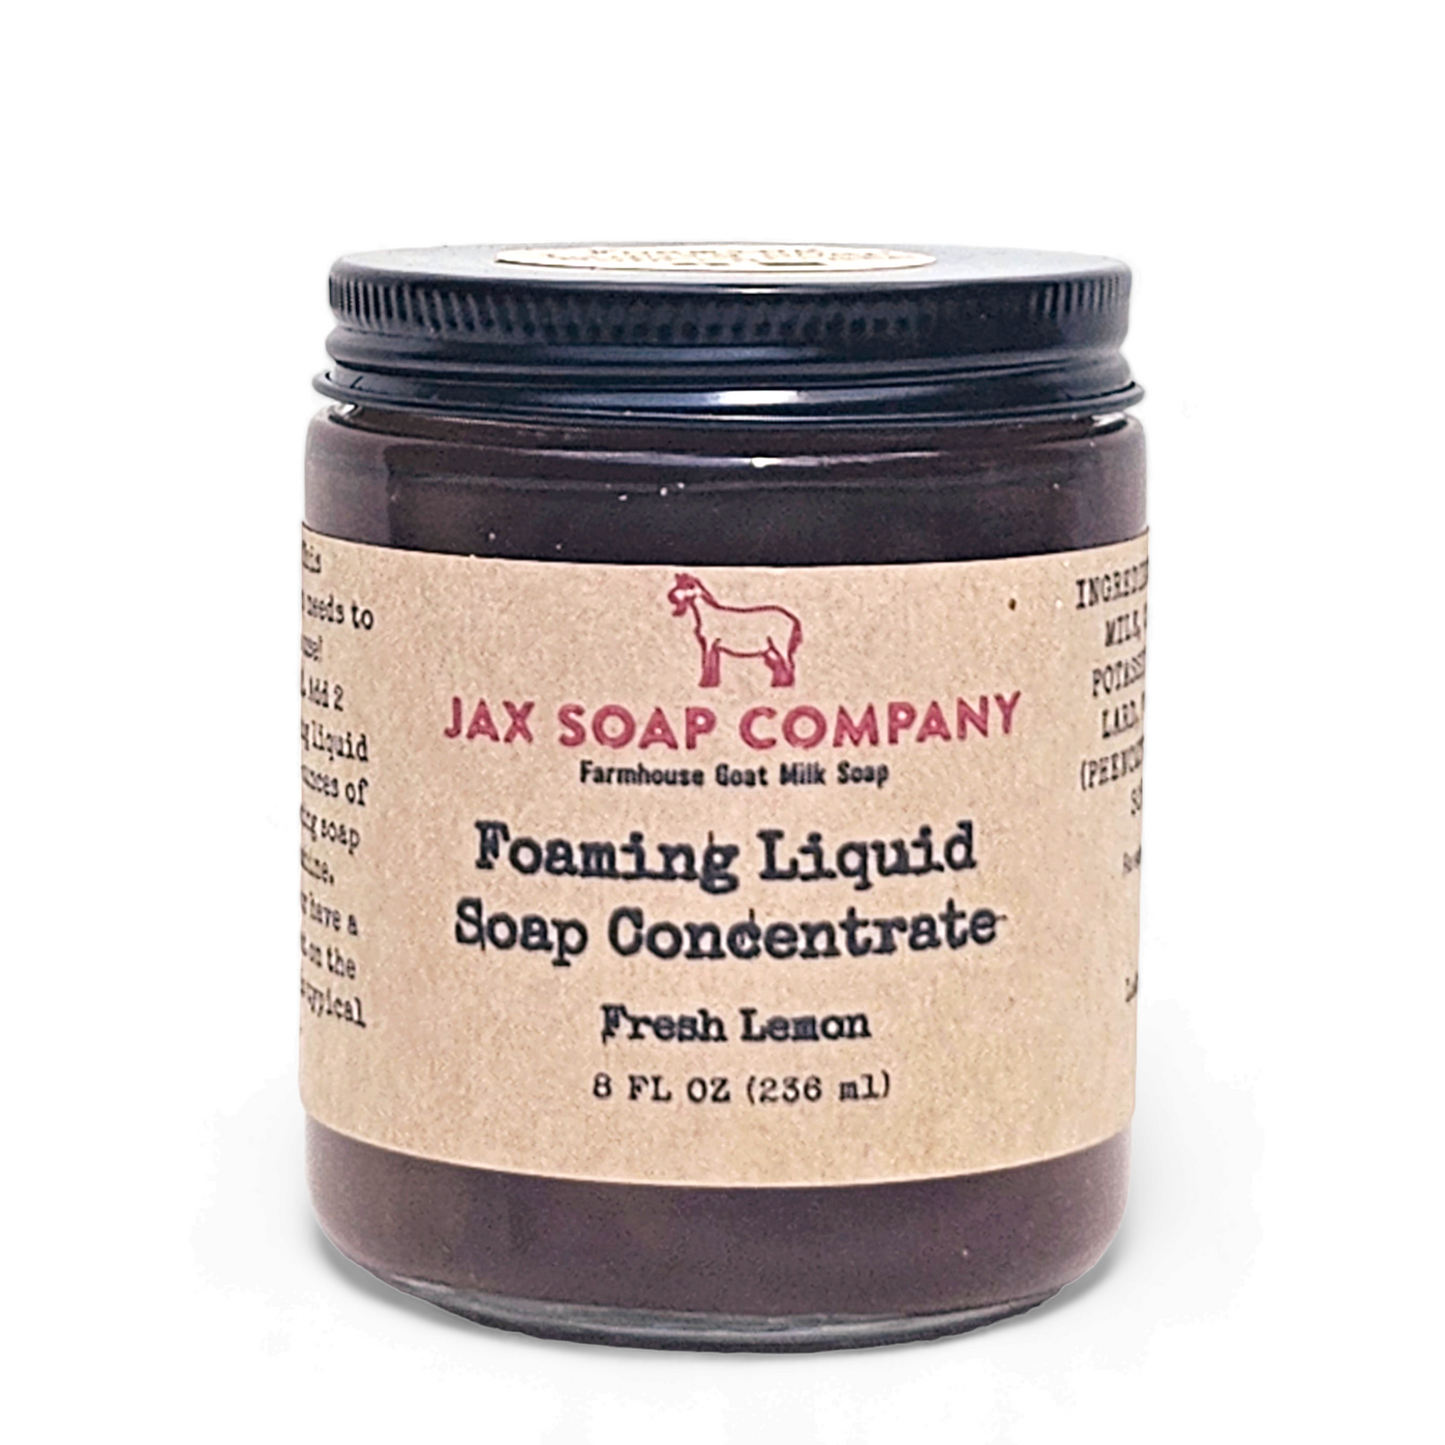 Foaming Hand Soap Concentrate Foaming Liquid Soap Concentrate Jax Soap Company   